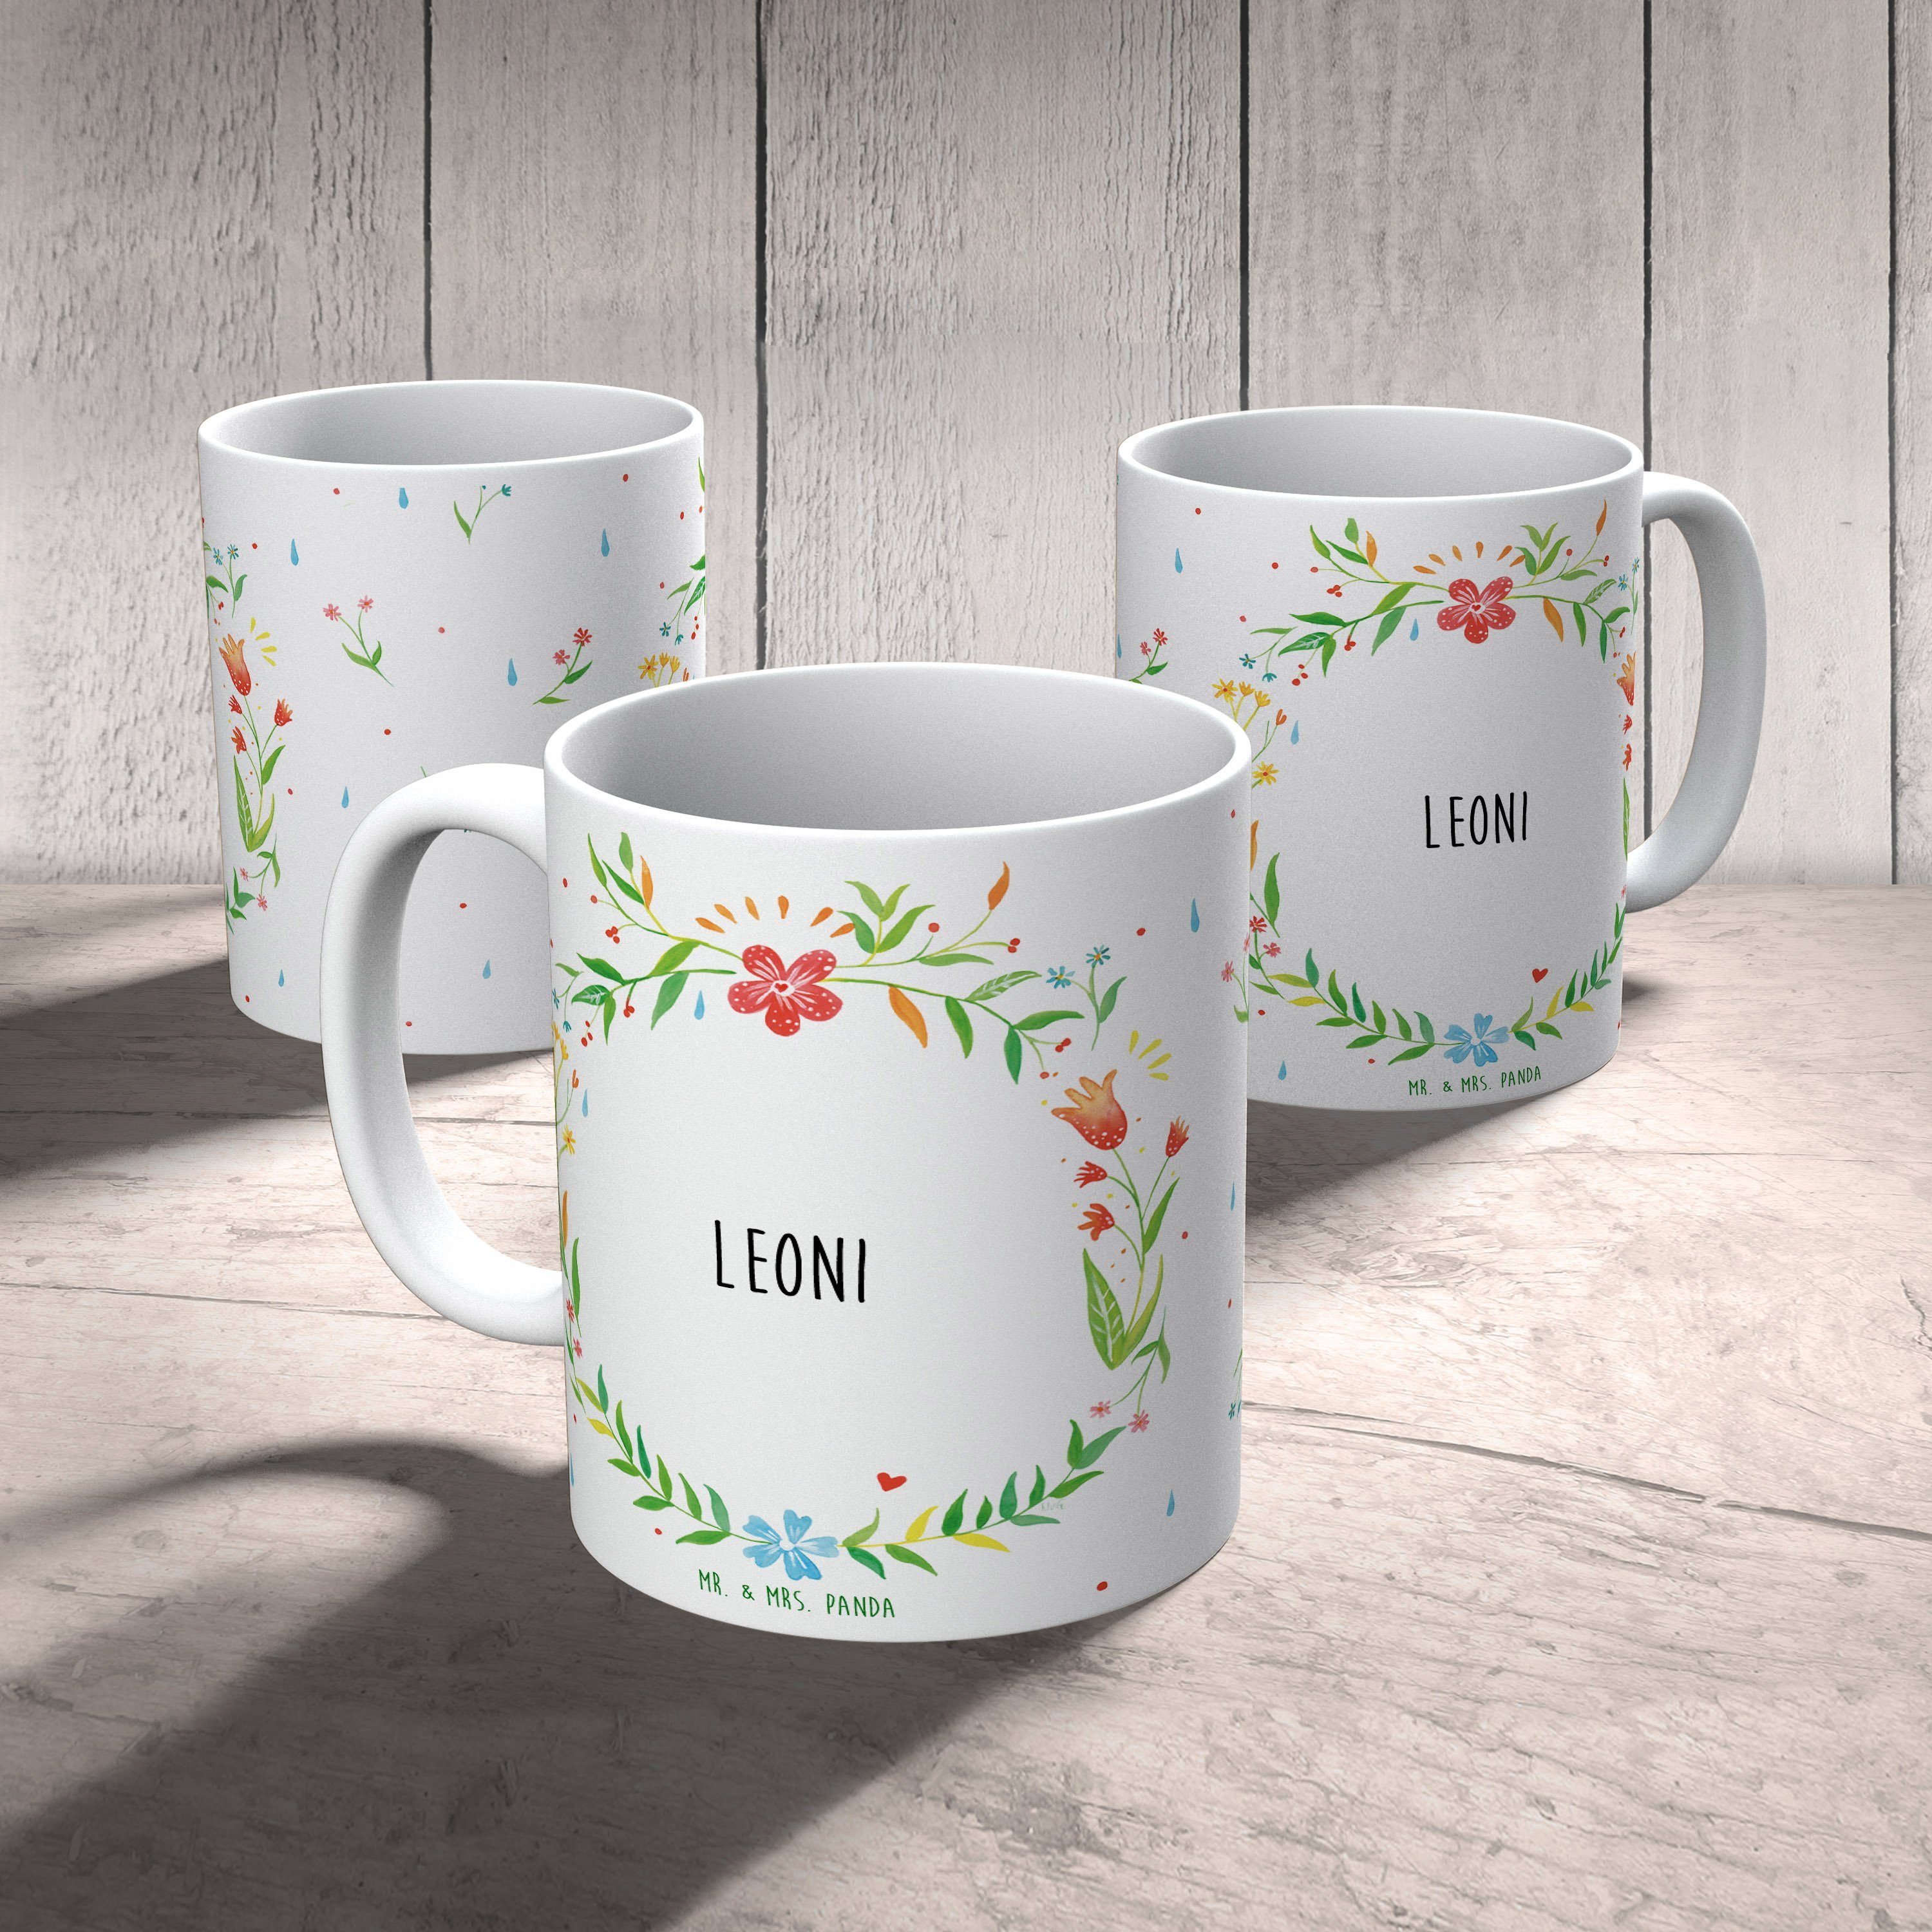 & Mr. Panda Tasse Geschenk, Keramikt, Keramik Geschenk Kaffeetasse, Mrs. - Leoni Tasse, Kaffeebecher,